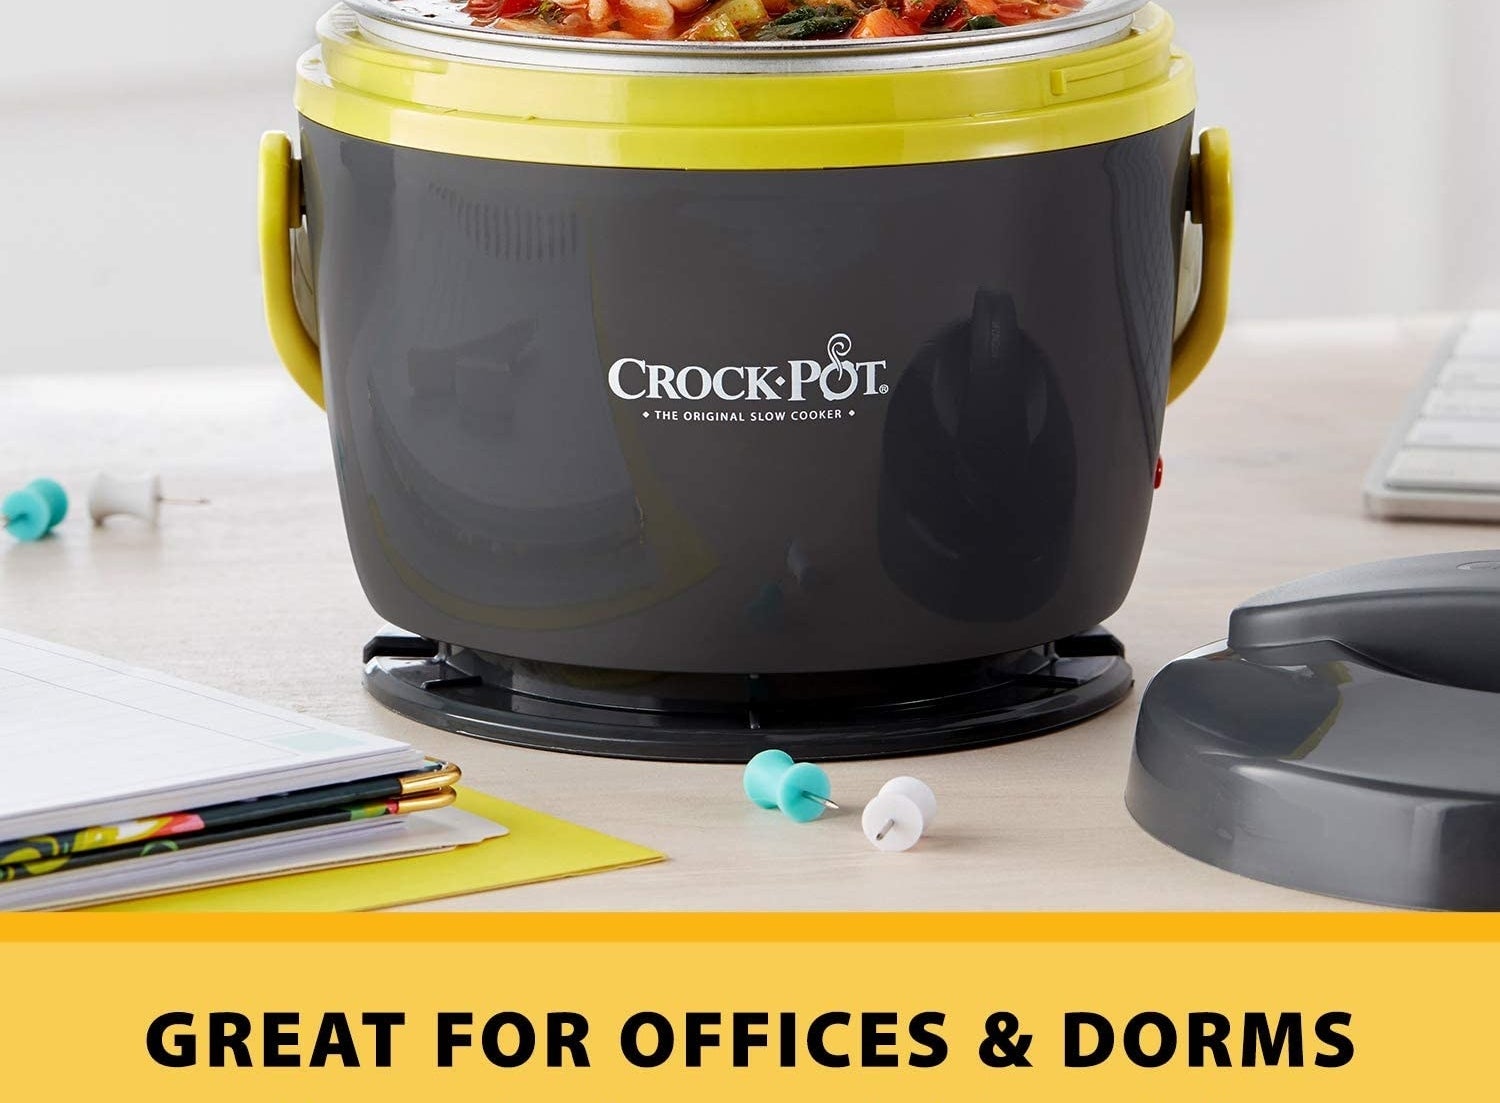 the crock-pot on a desk next to office supplies